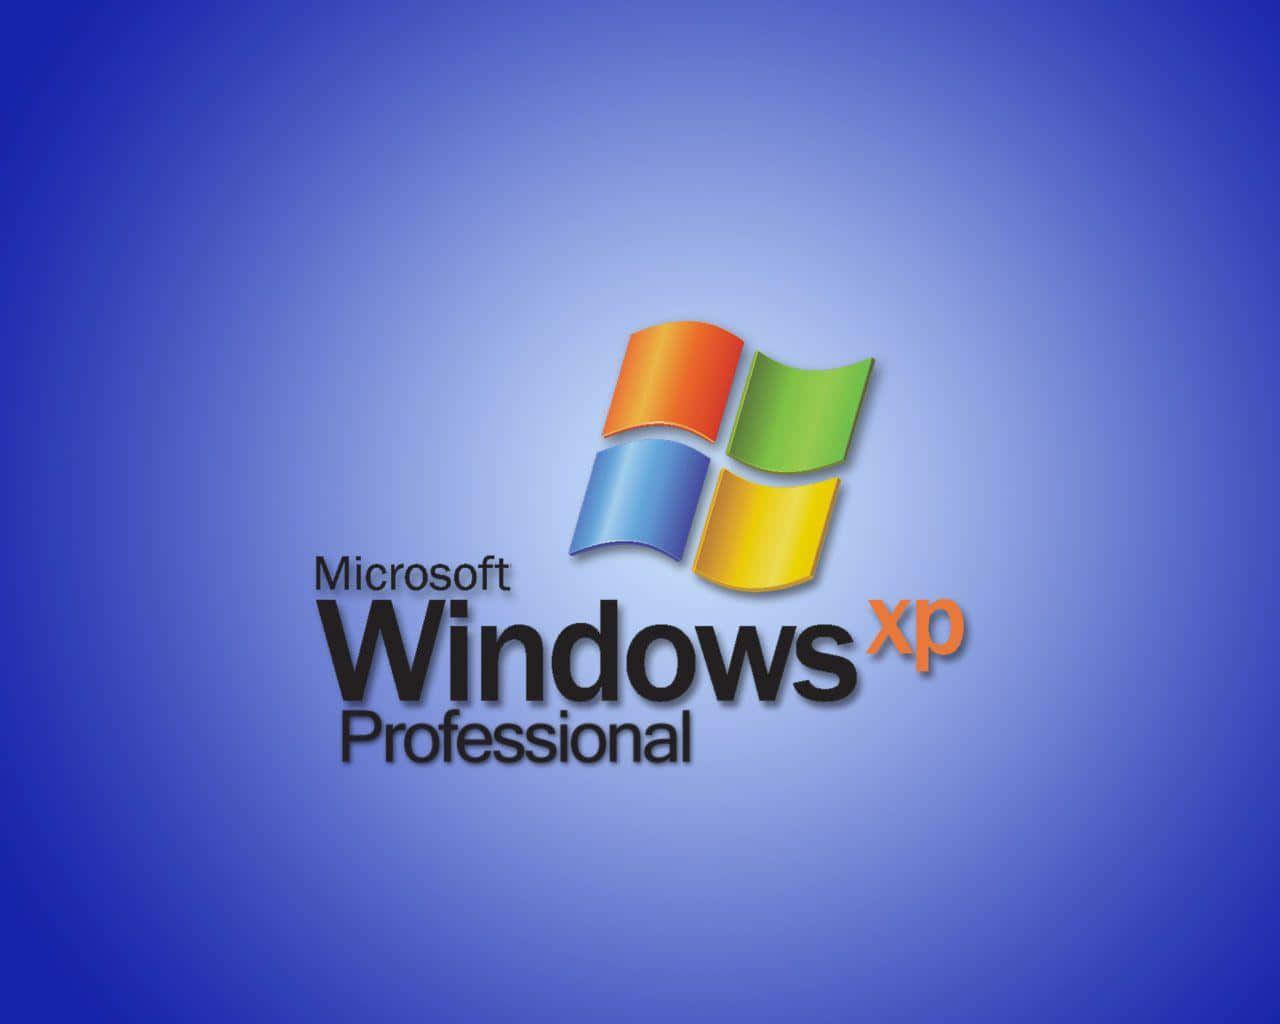 Accedea Las Infinitas Posibilidades De Windows Xp